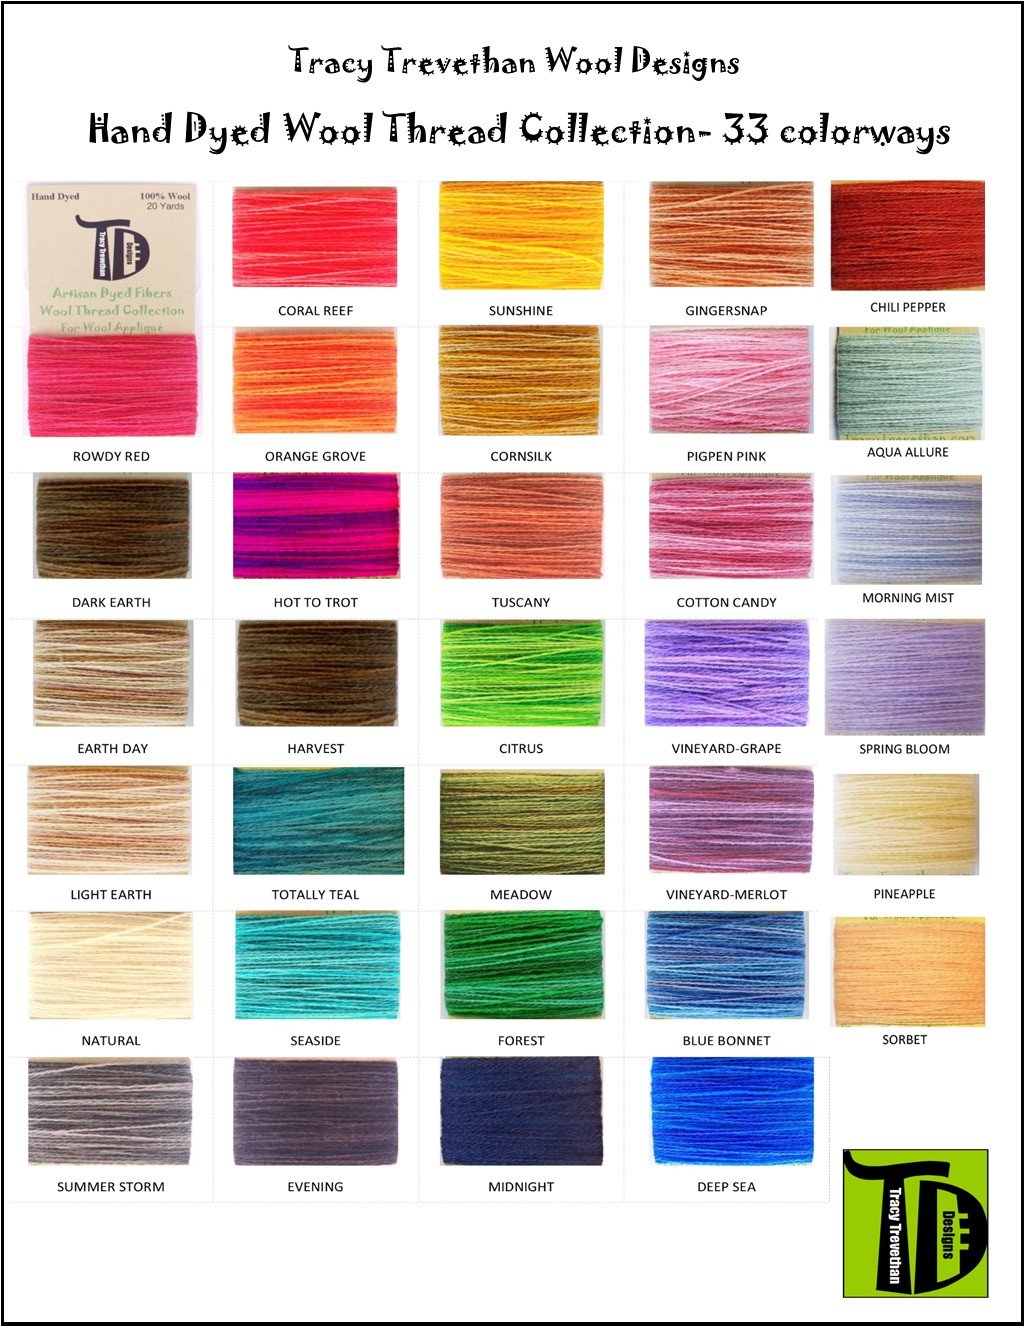 TT - Hand Dyed Wool Thread